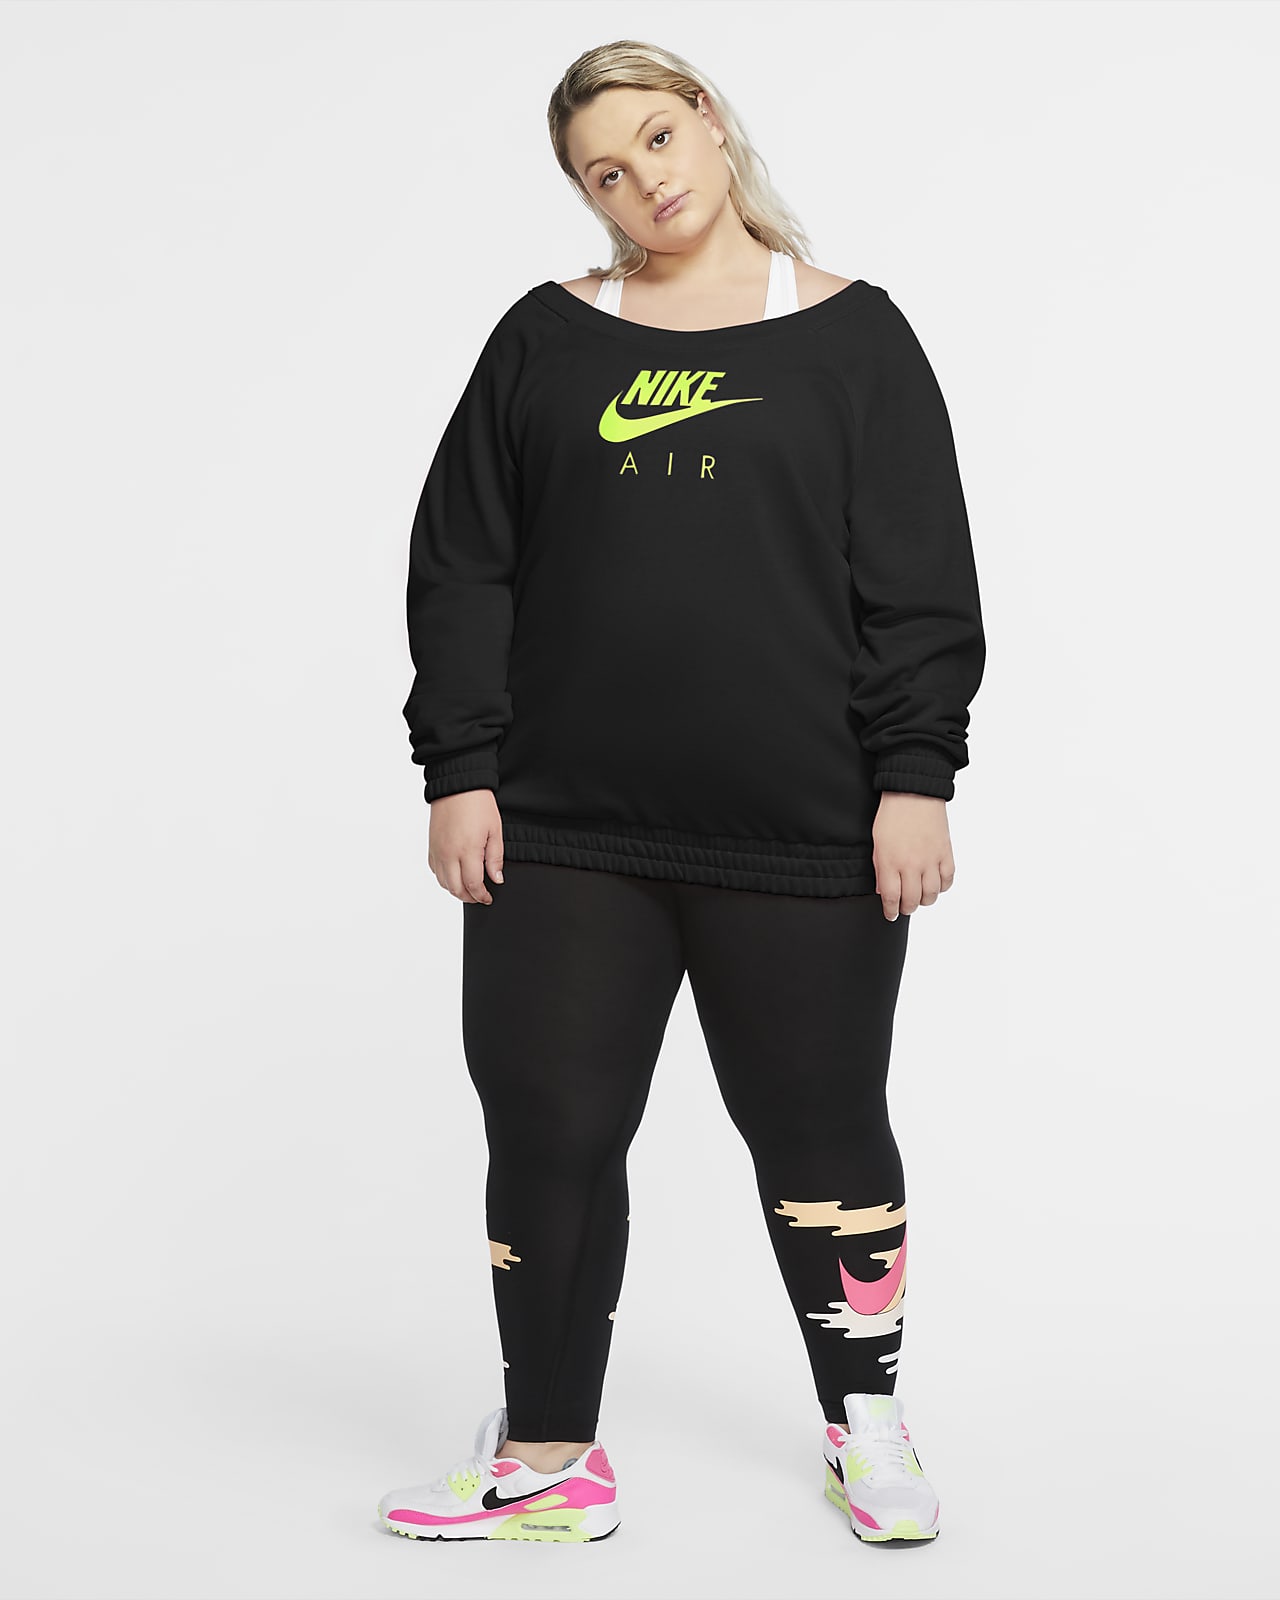 Nike Air Women's Long-Sleeve Fleece Top (Plus Size). Nike HR